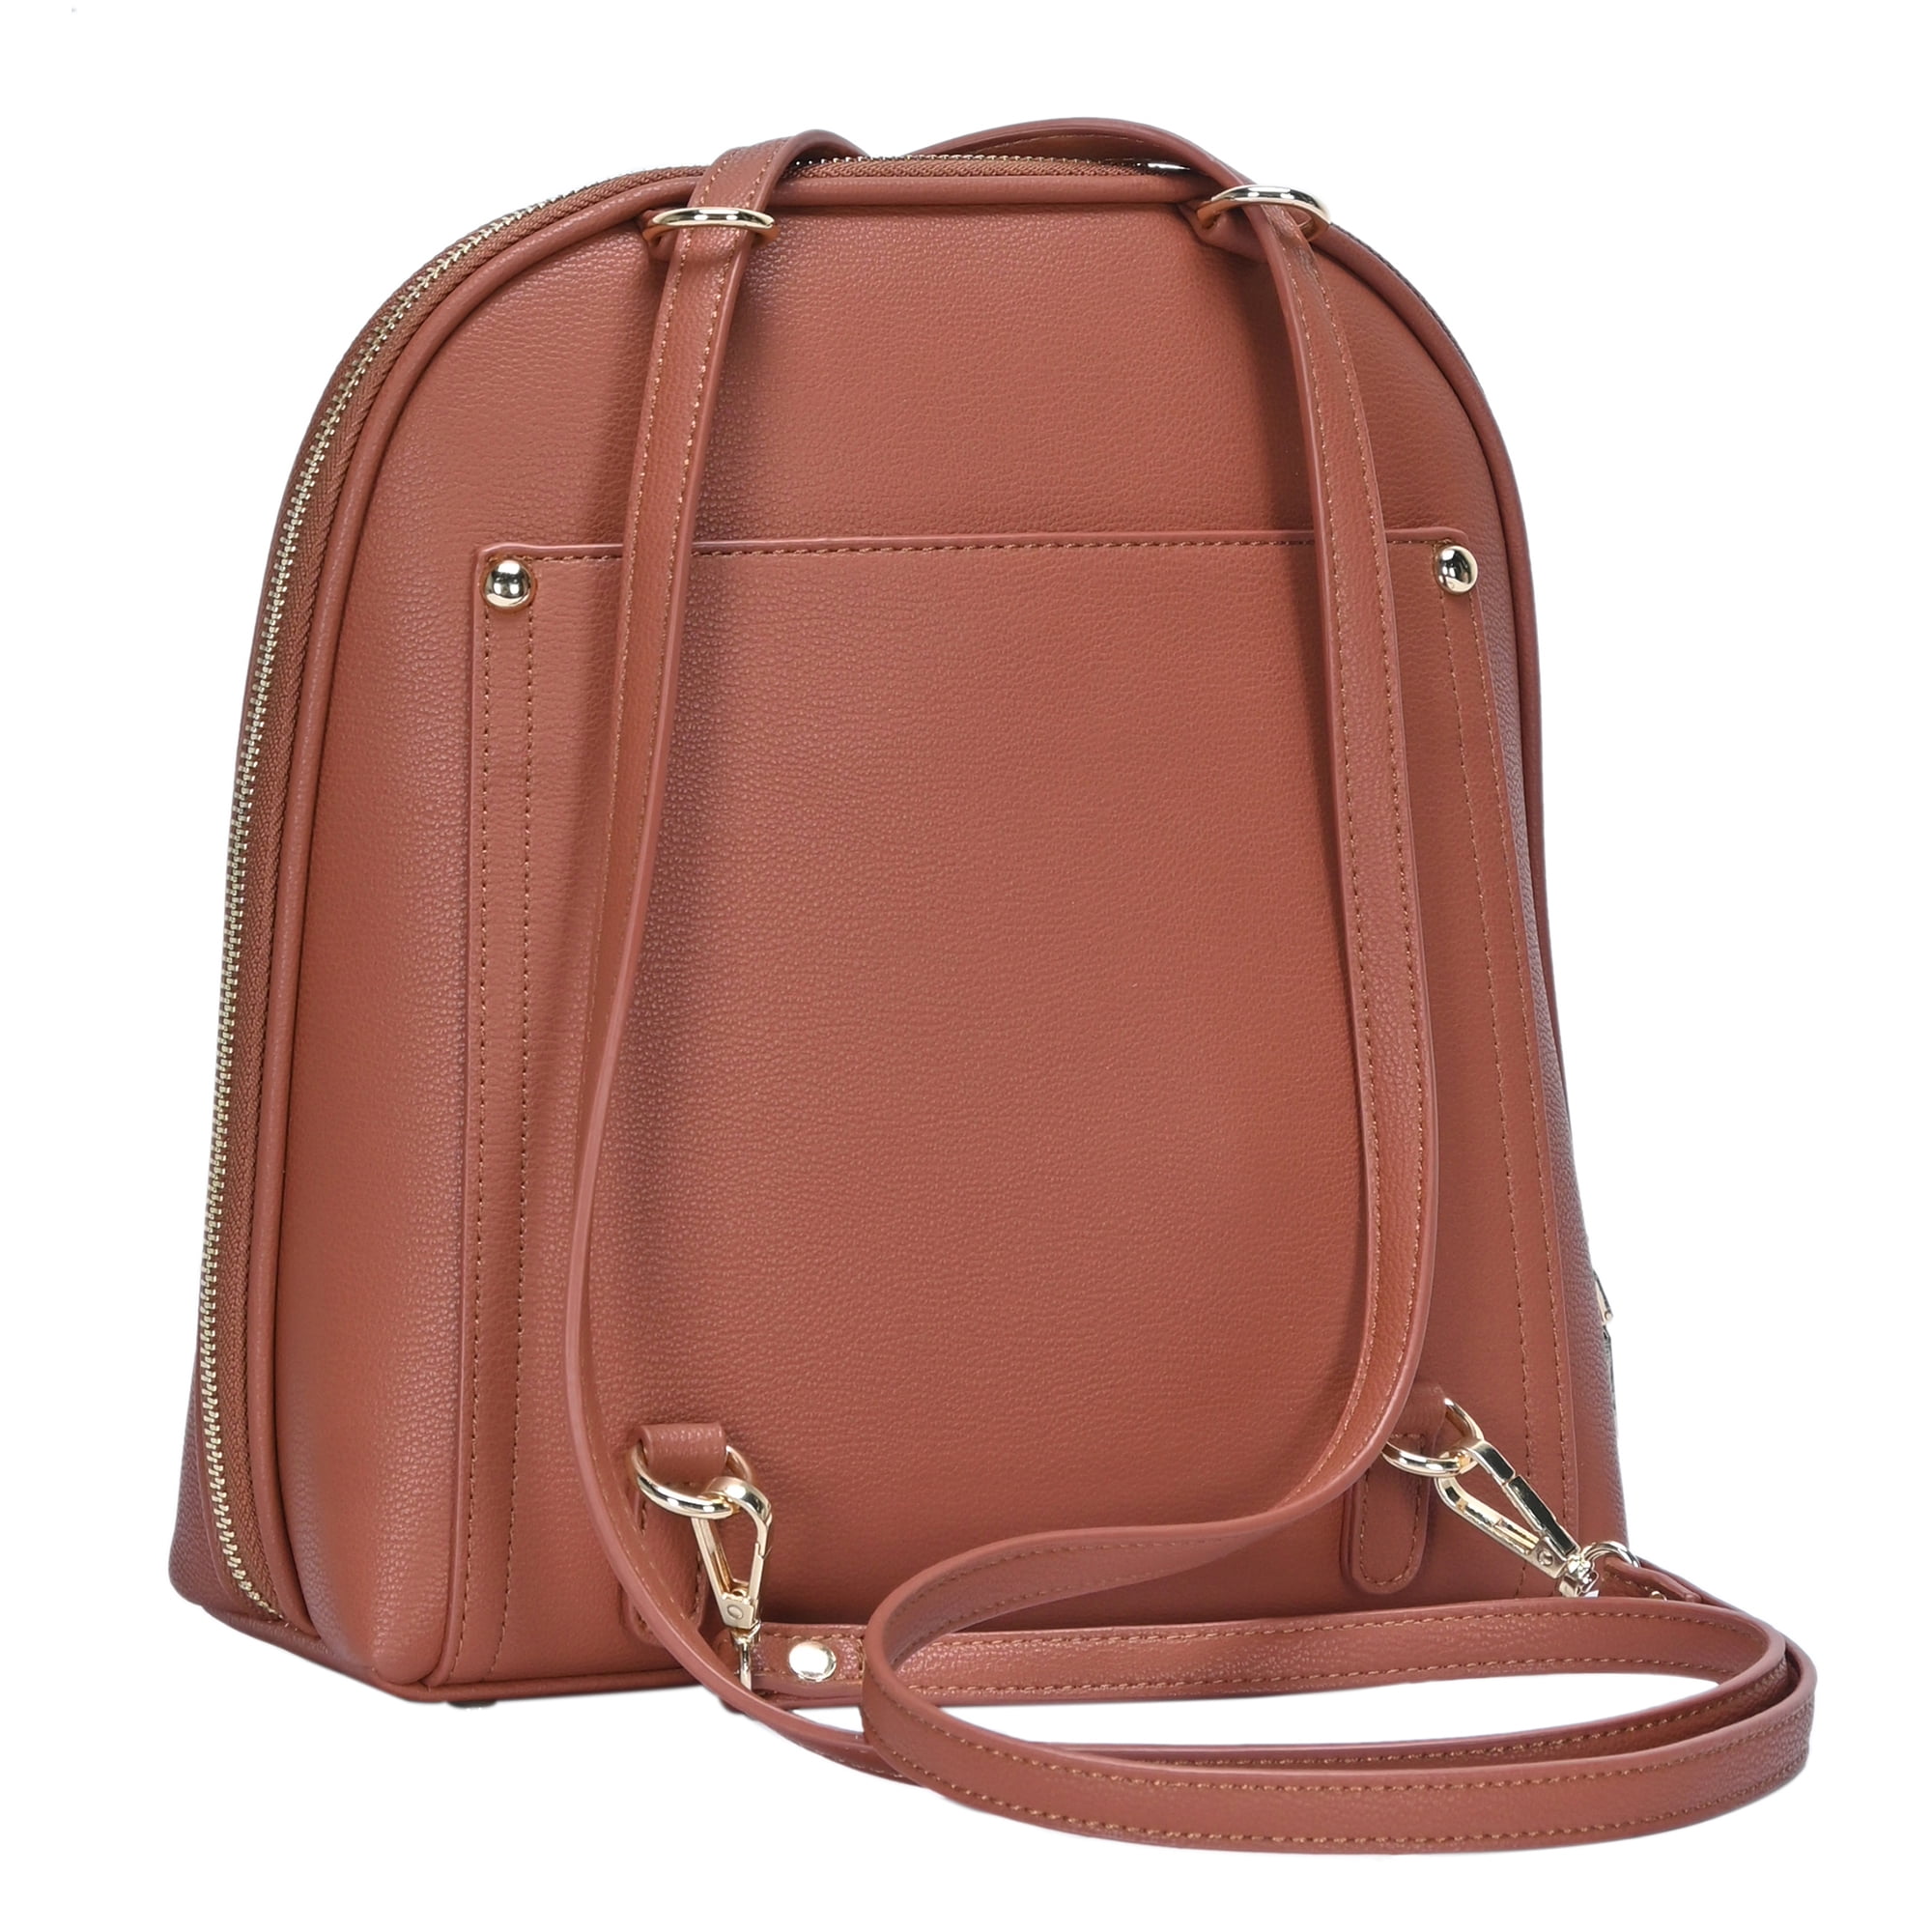 leather miztique handbags